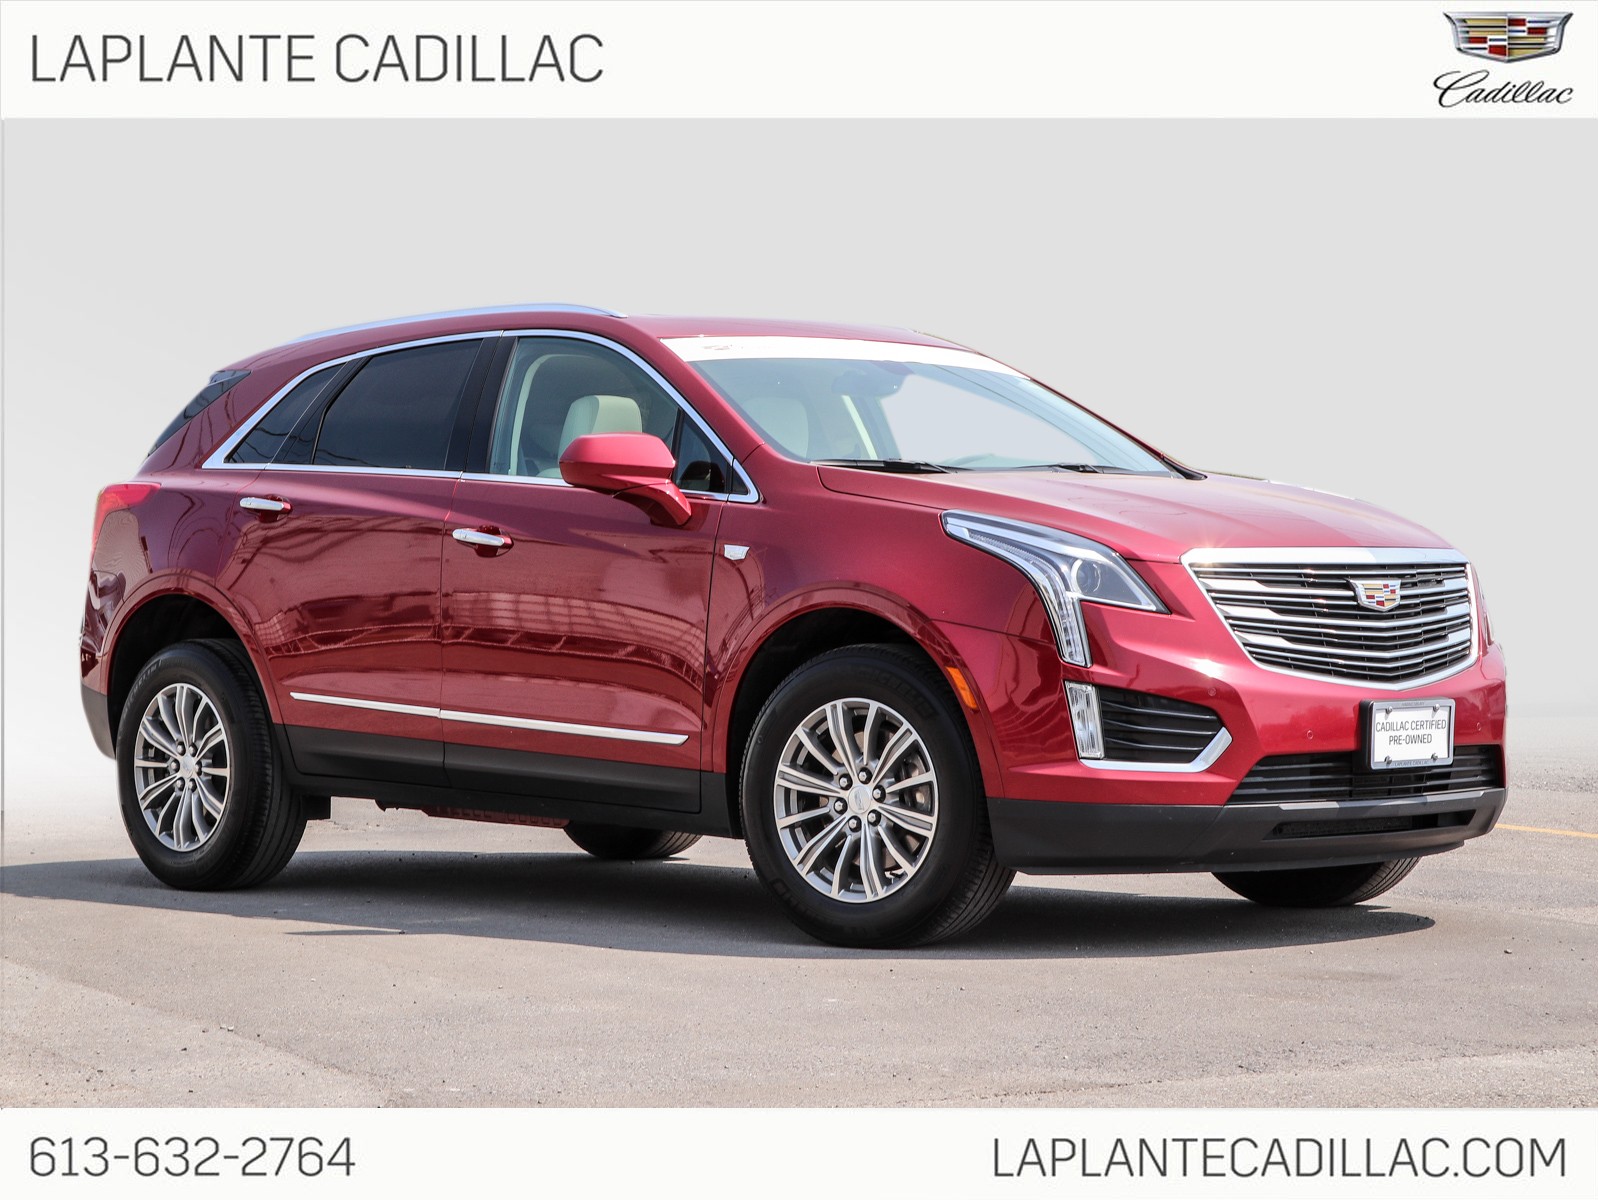 2019 Cadillac XT5 Luxury - 61355km